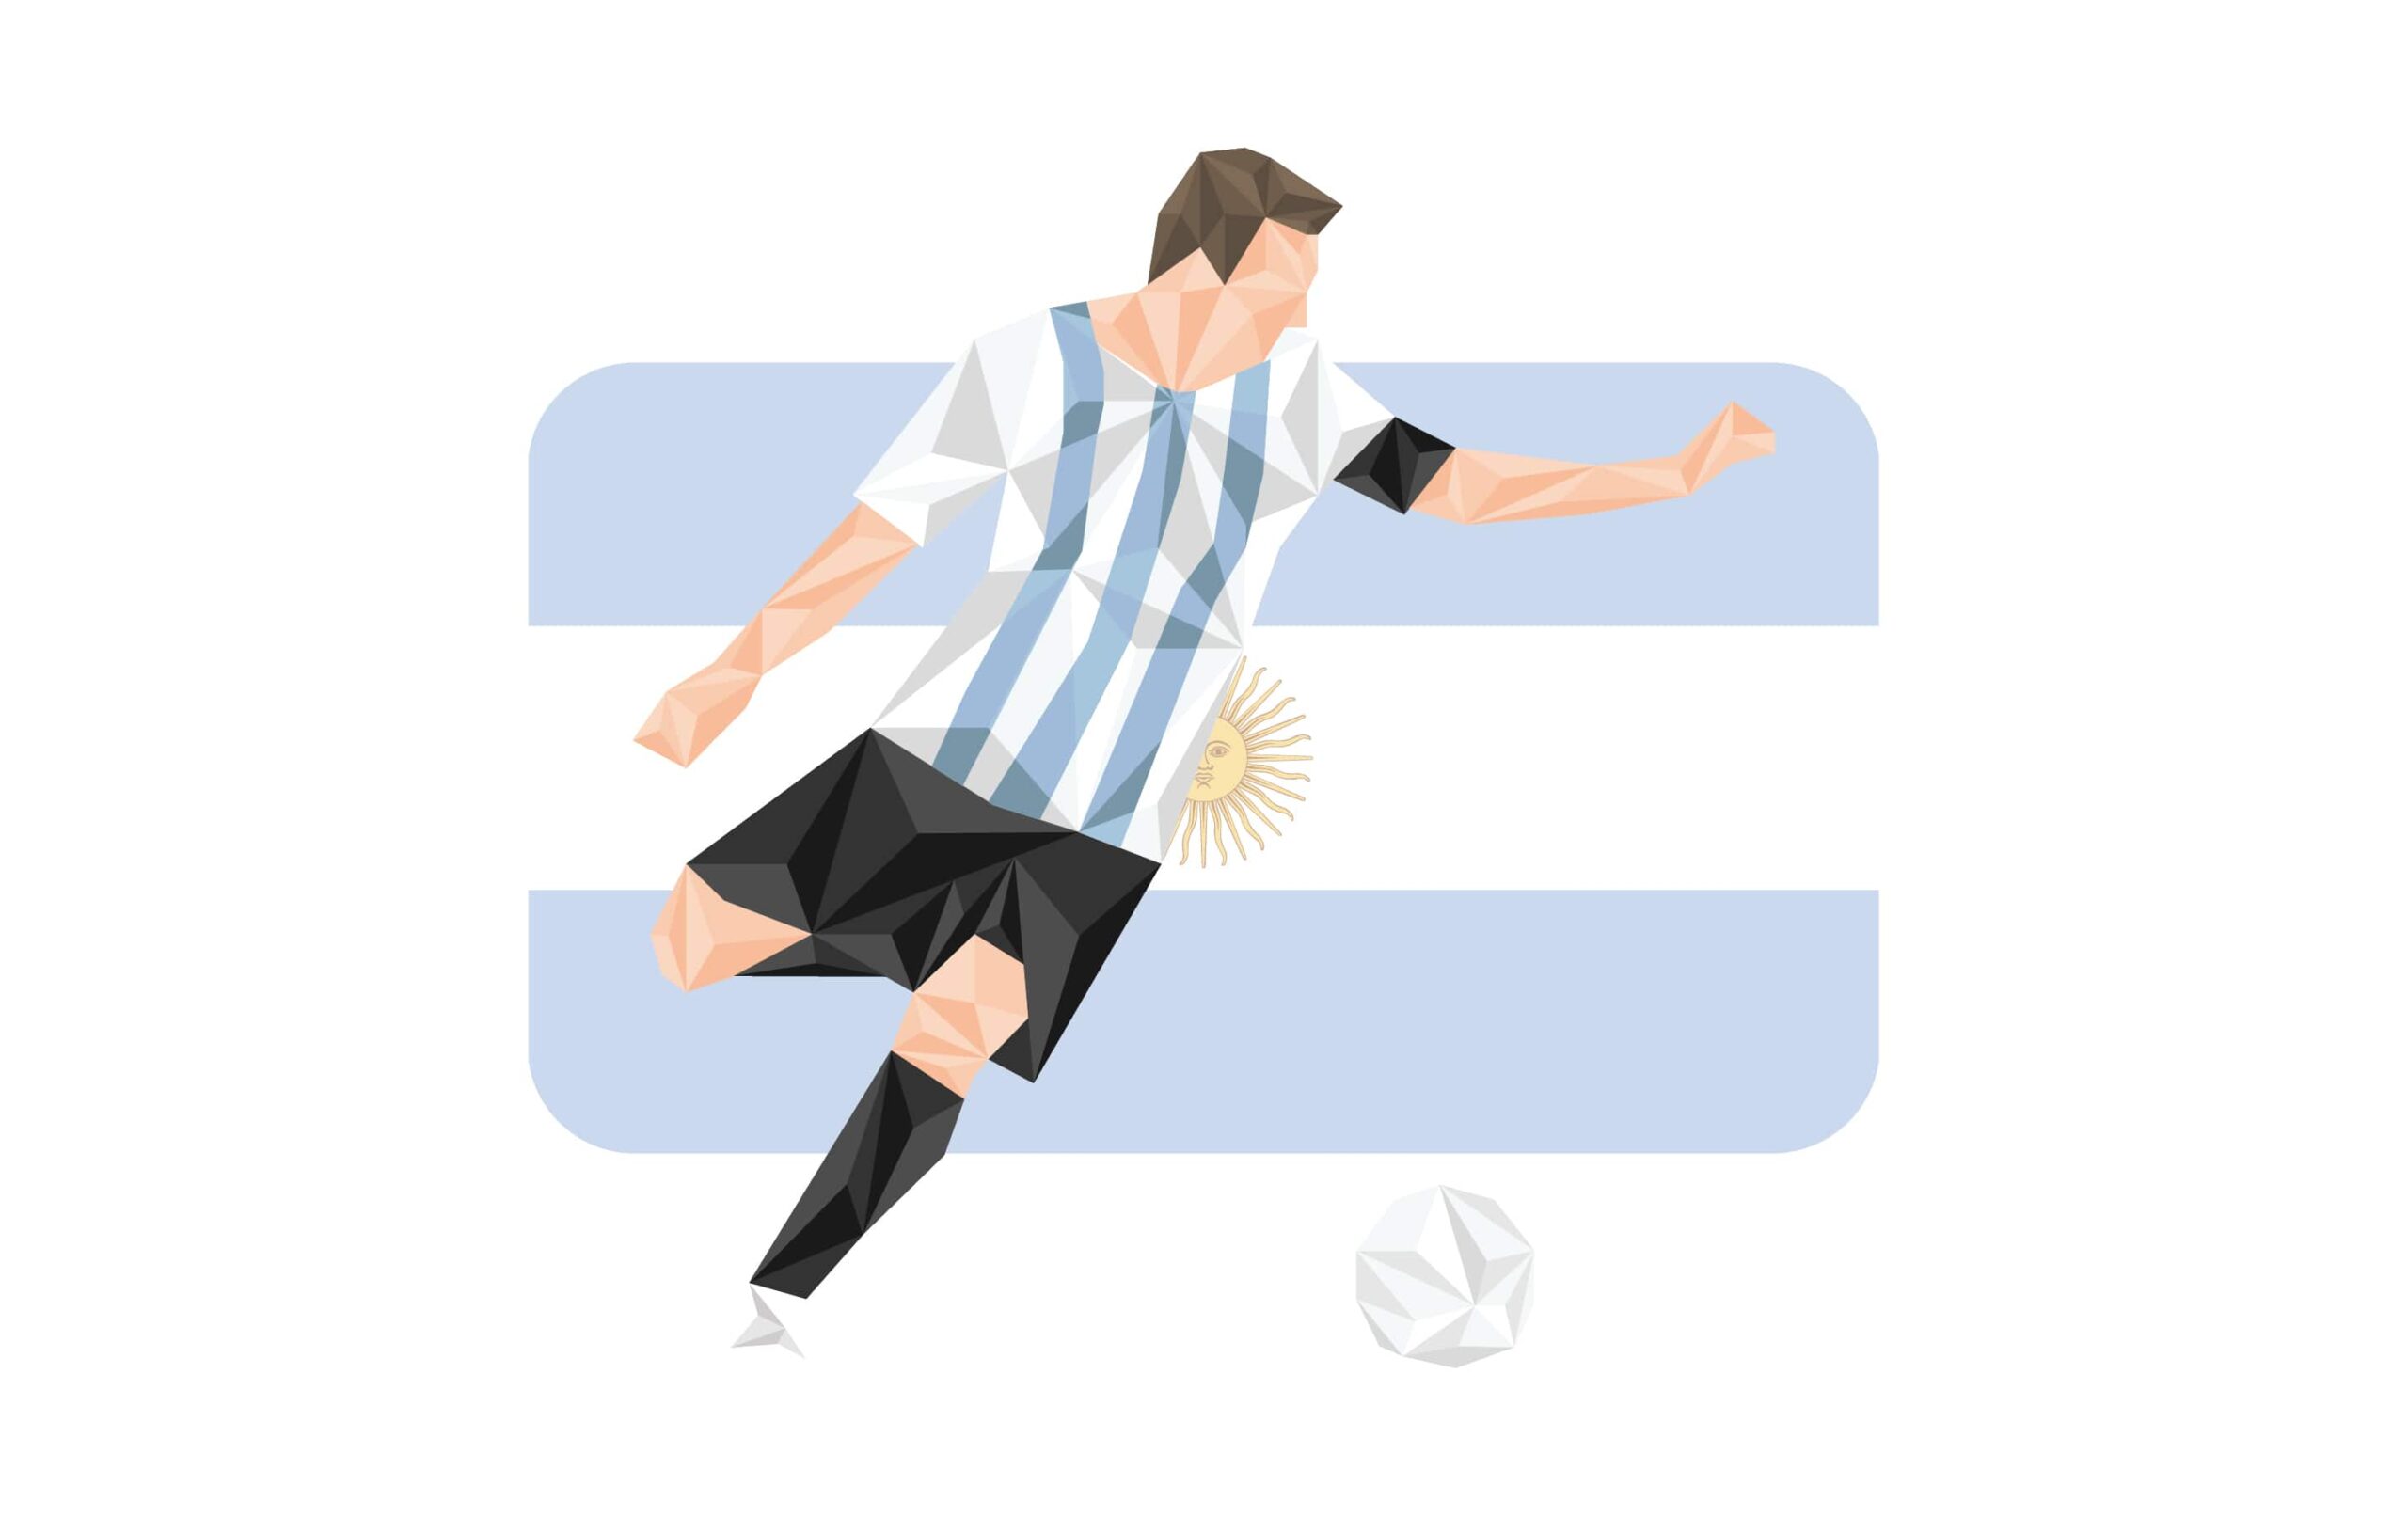 Messi 4K Wallpaper